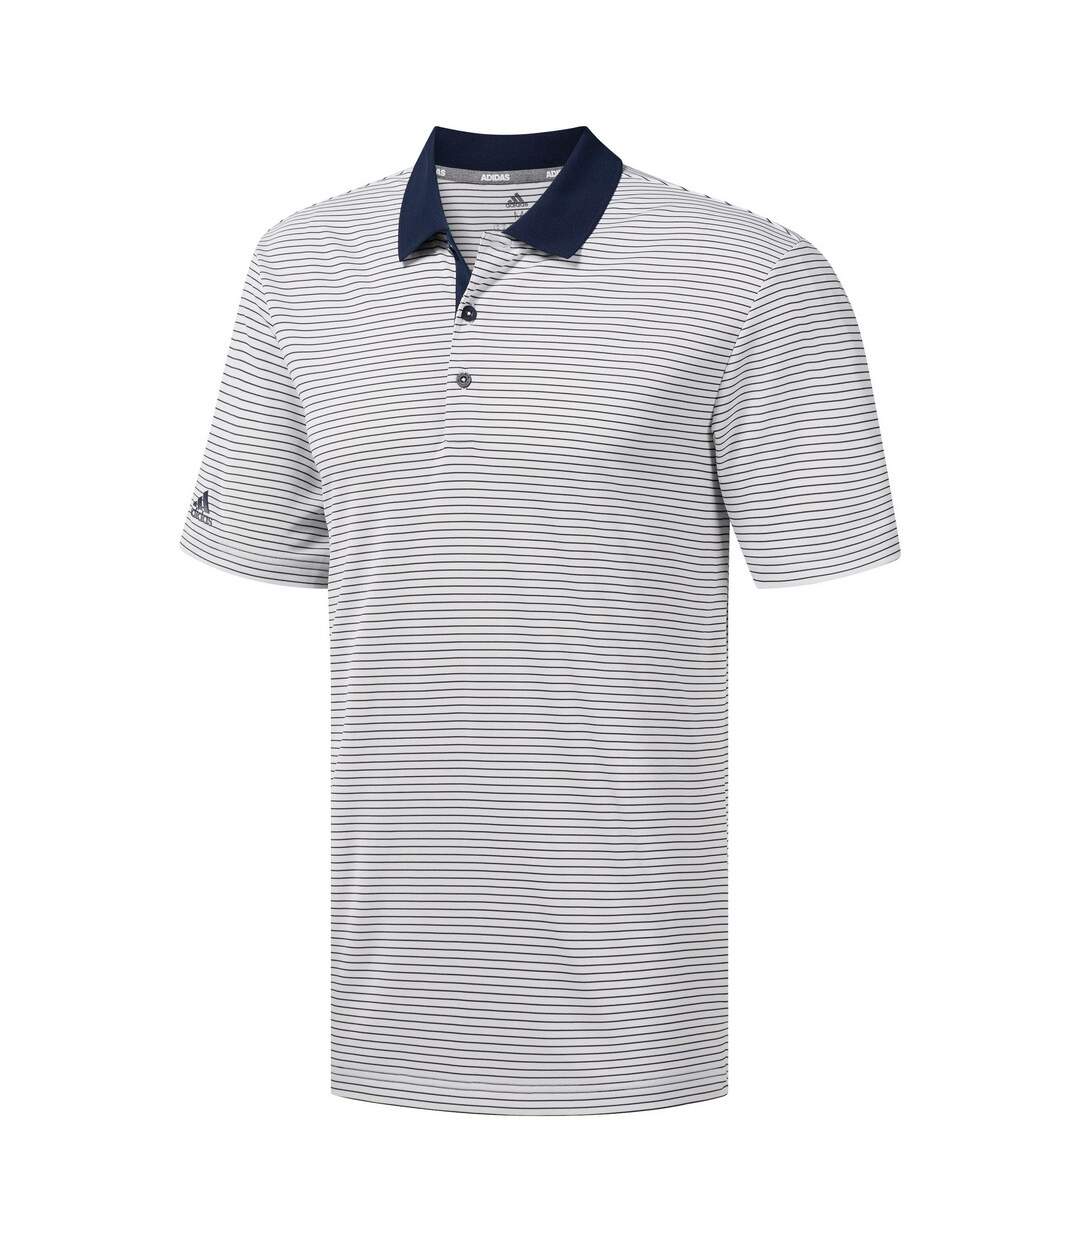 Adidas Mens 2-Color Stripe Polo (White/Navy)